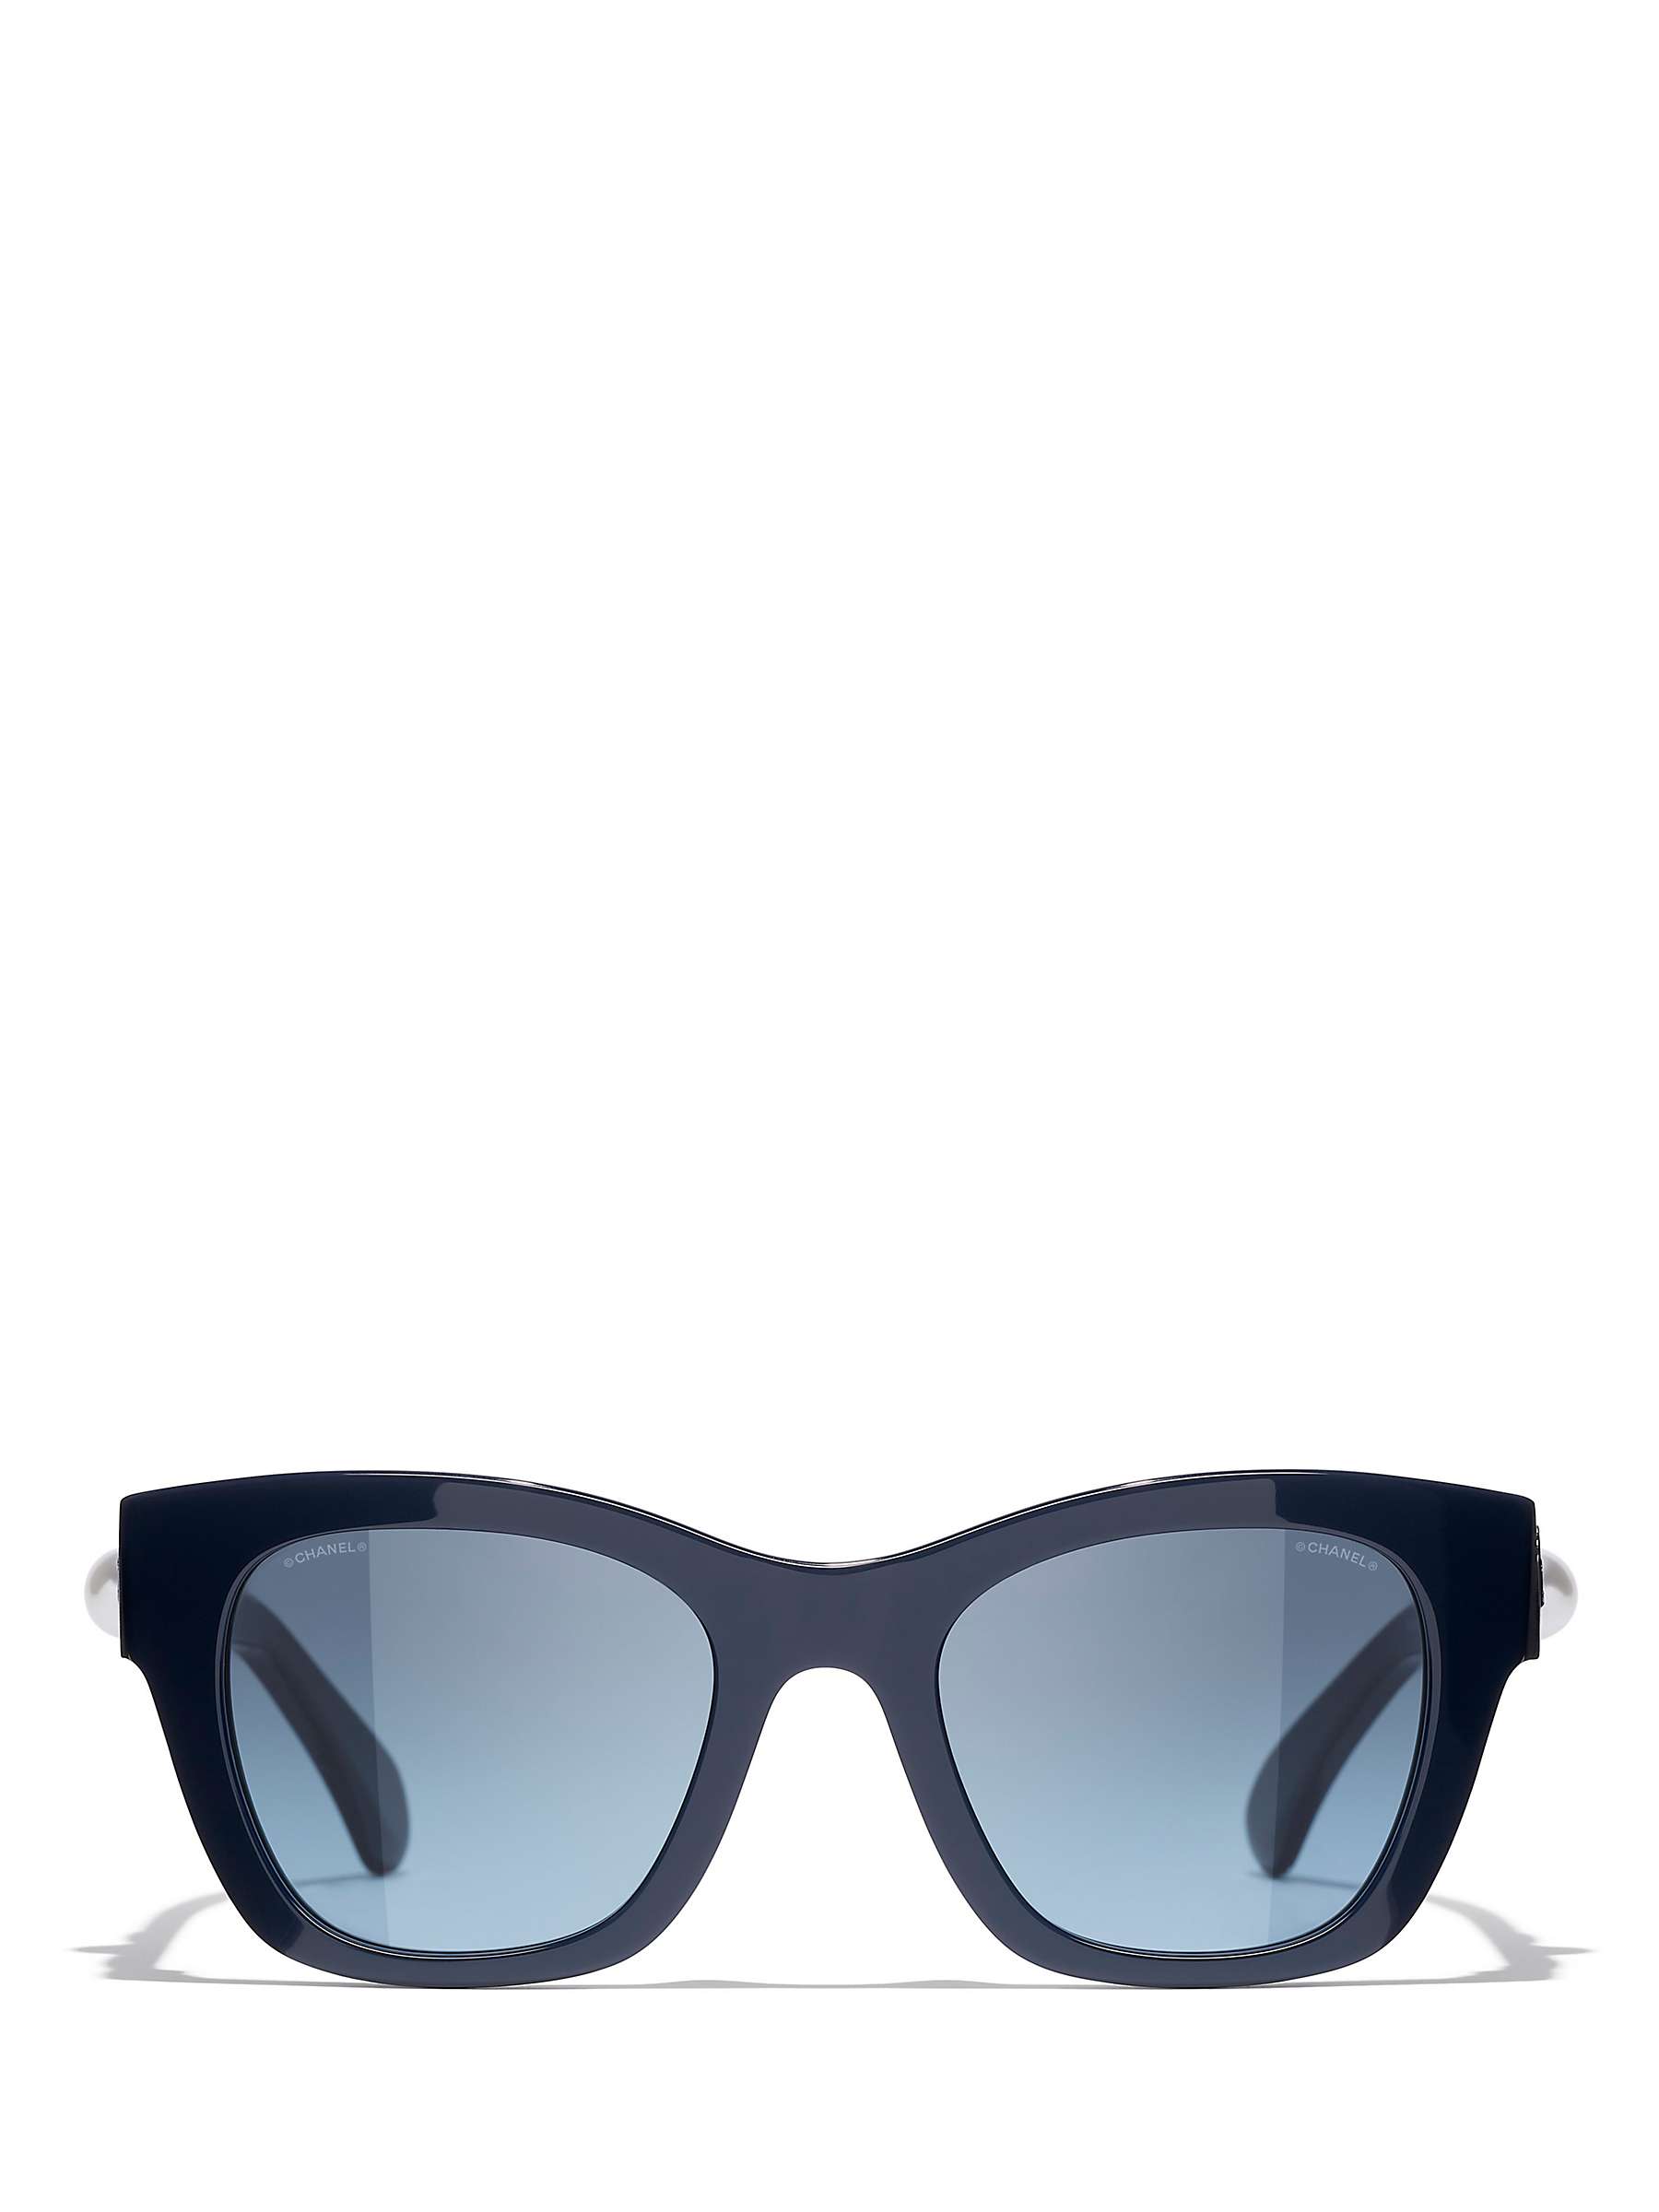 CHANEL CH5478 Women's Irregular Sunglasses, Blue/Grey at John